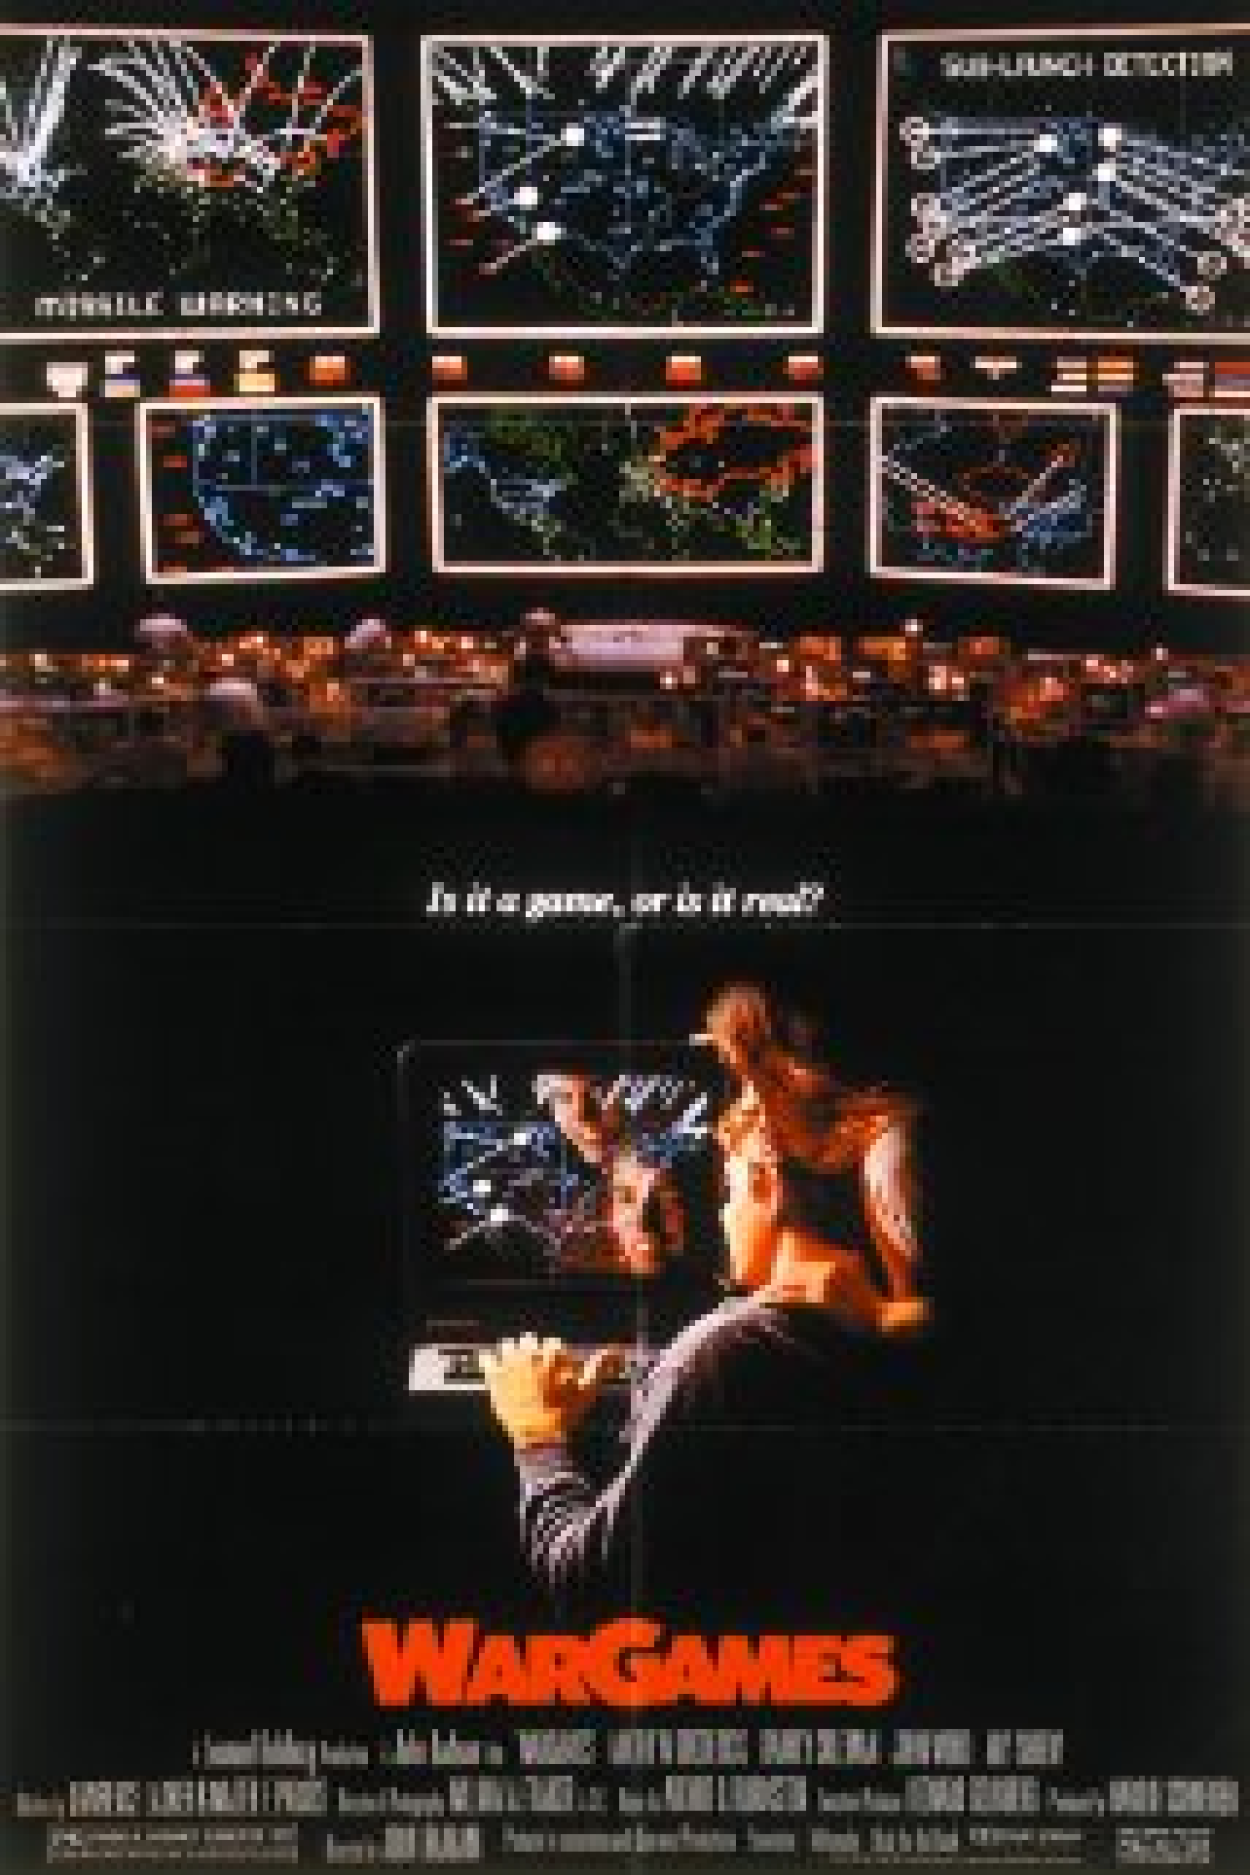 Crítica  Jogos de Guerra (1983) - Plano Crítico